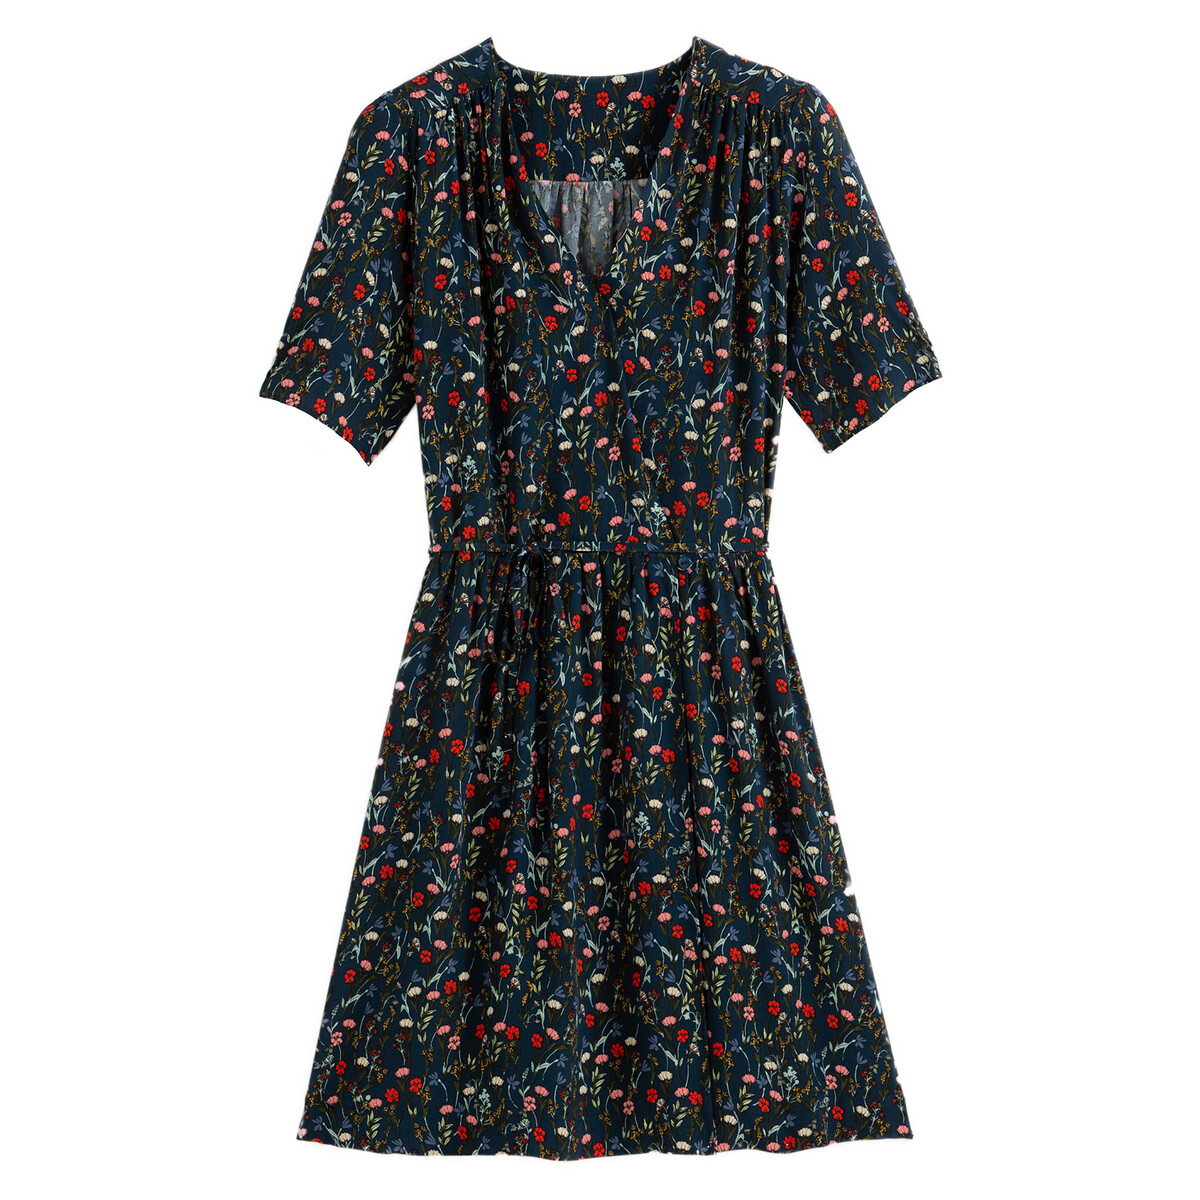 Платье La Redoute С запахом с короткими рукавами 46 (FR) - 52 (RUS) синий, размер 46 (FR) - 52 (RUS) С запахом с короткими рукавами 46 (FR) - 52 (RUS) синий - фото 5